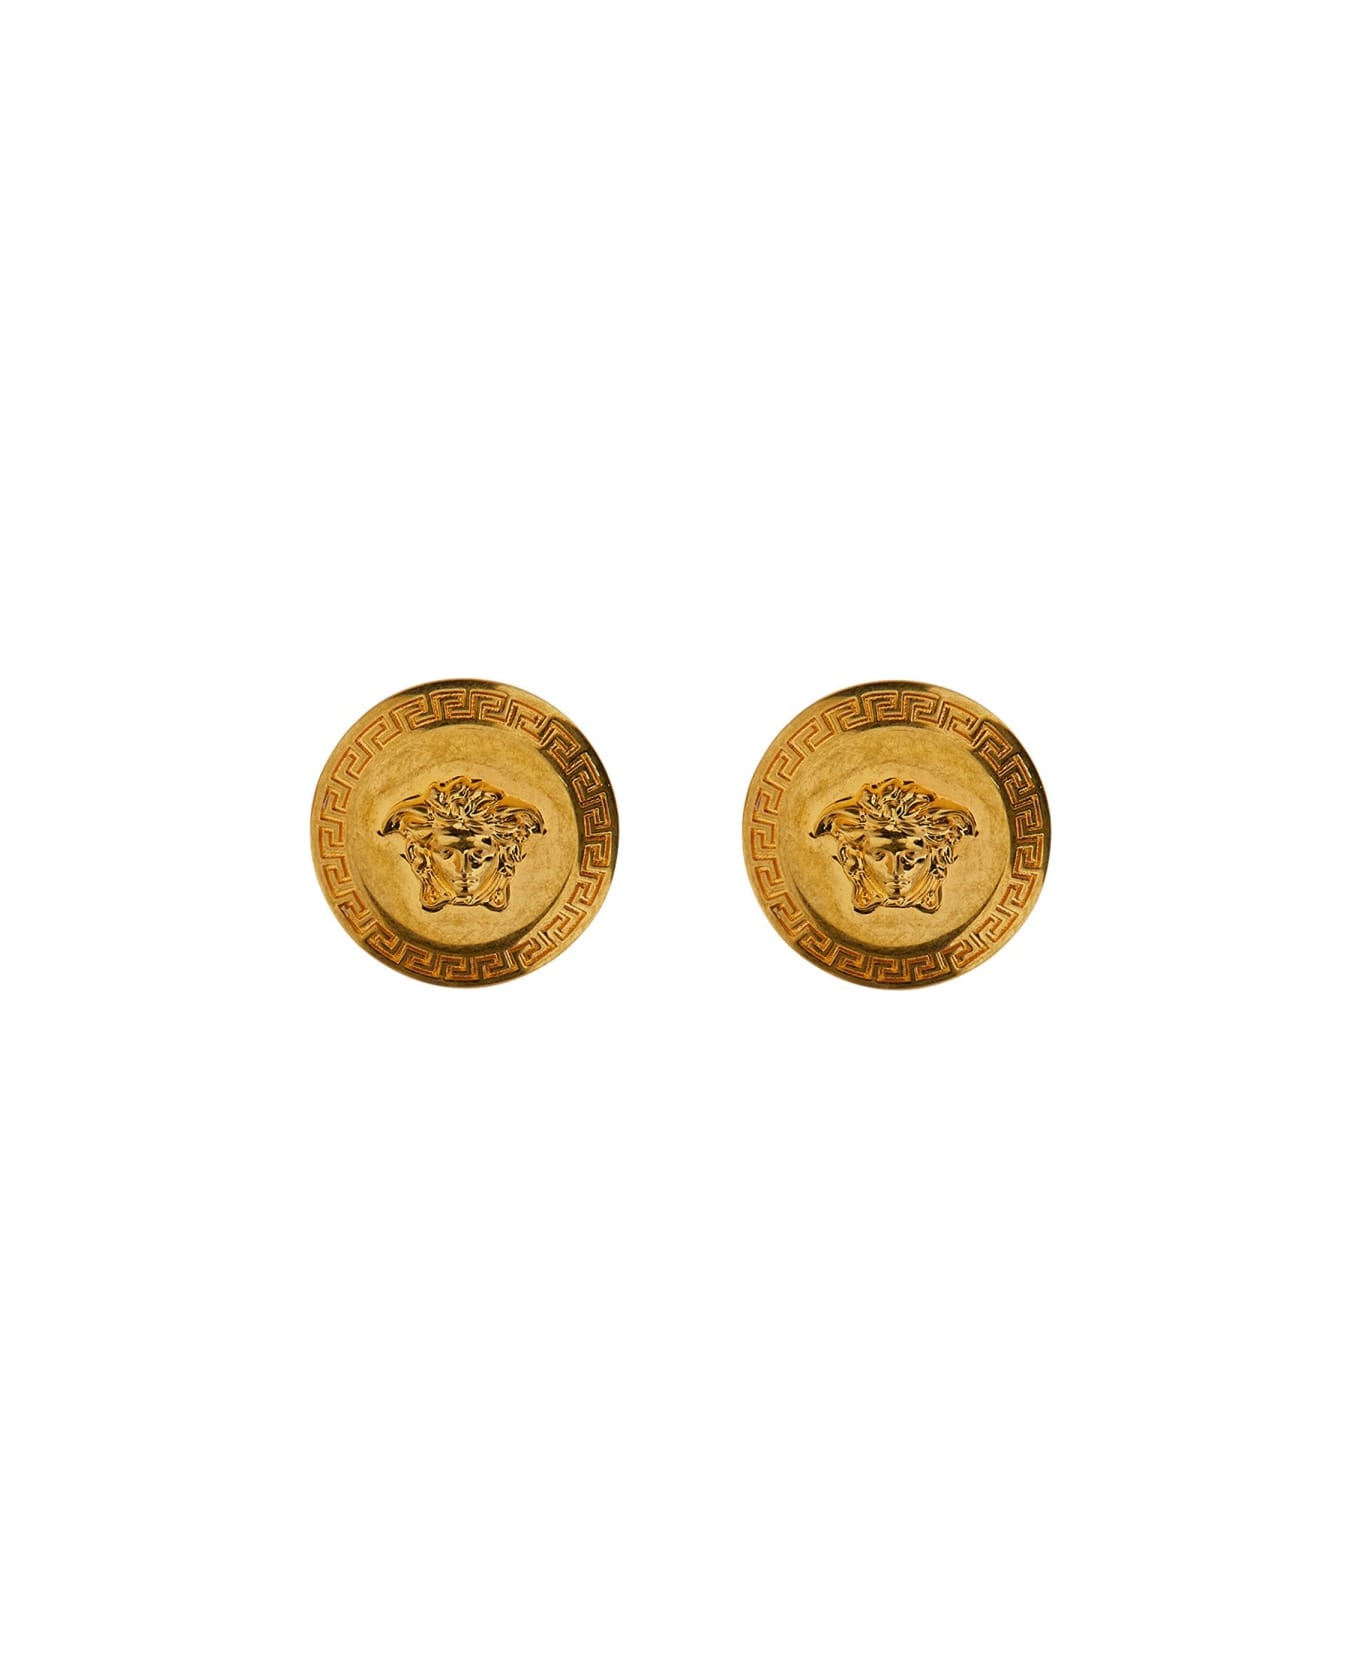 Versace "jellyfish" Tribute Earrings - GOLD